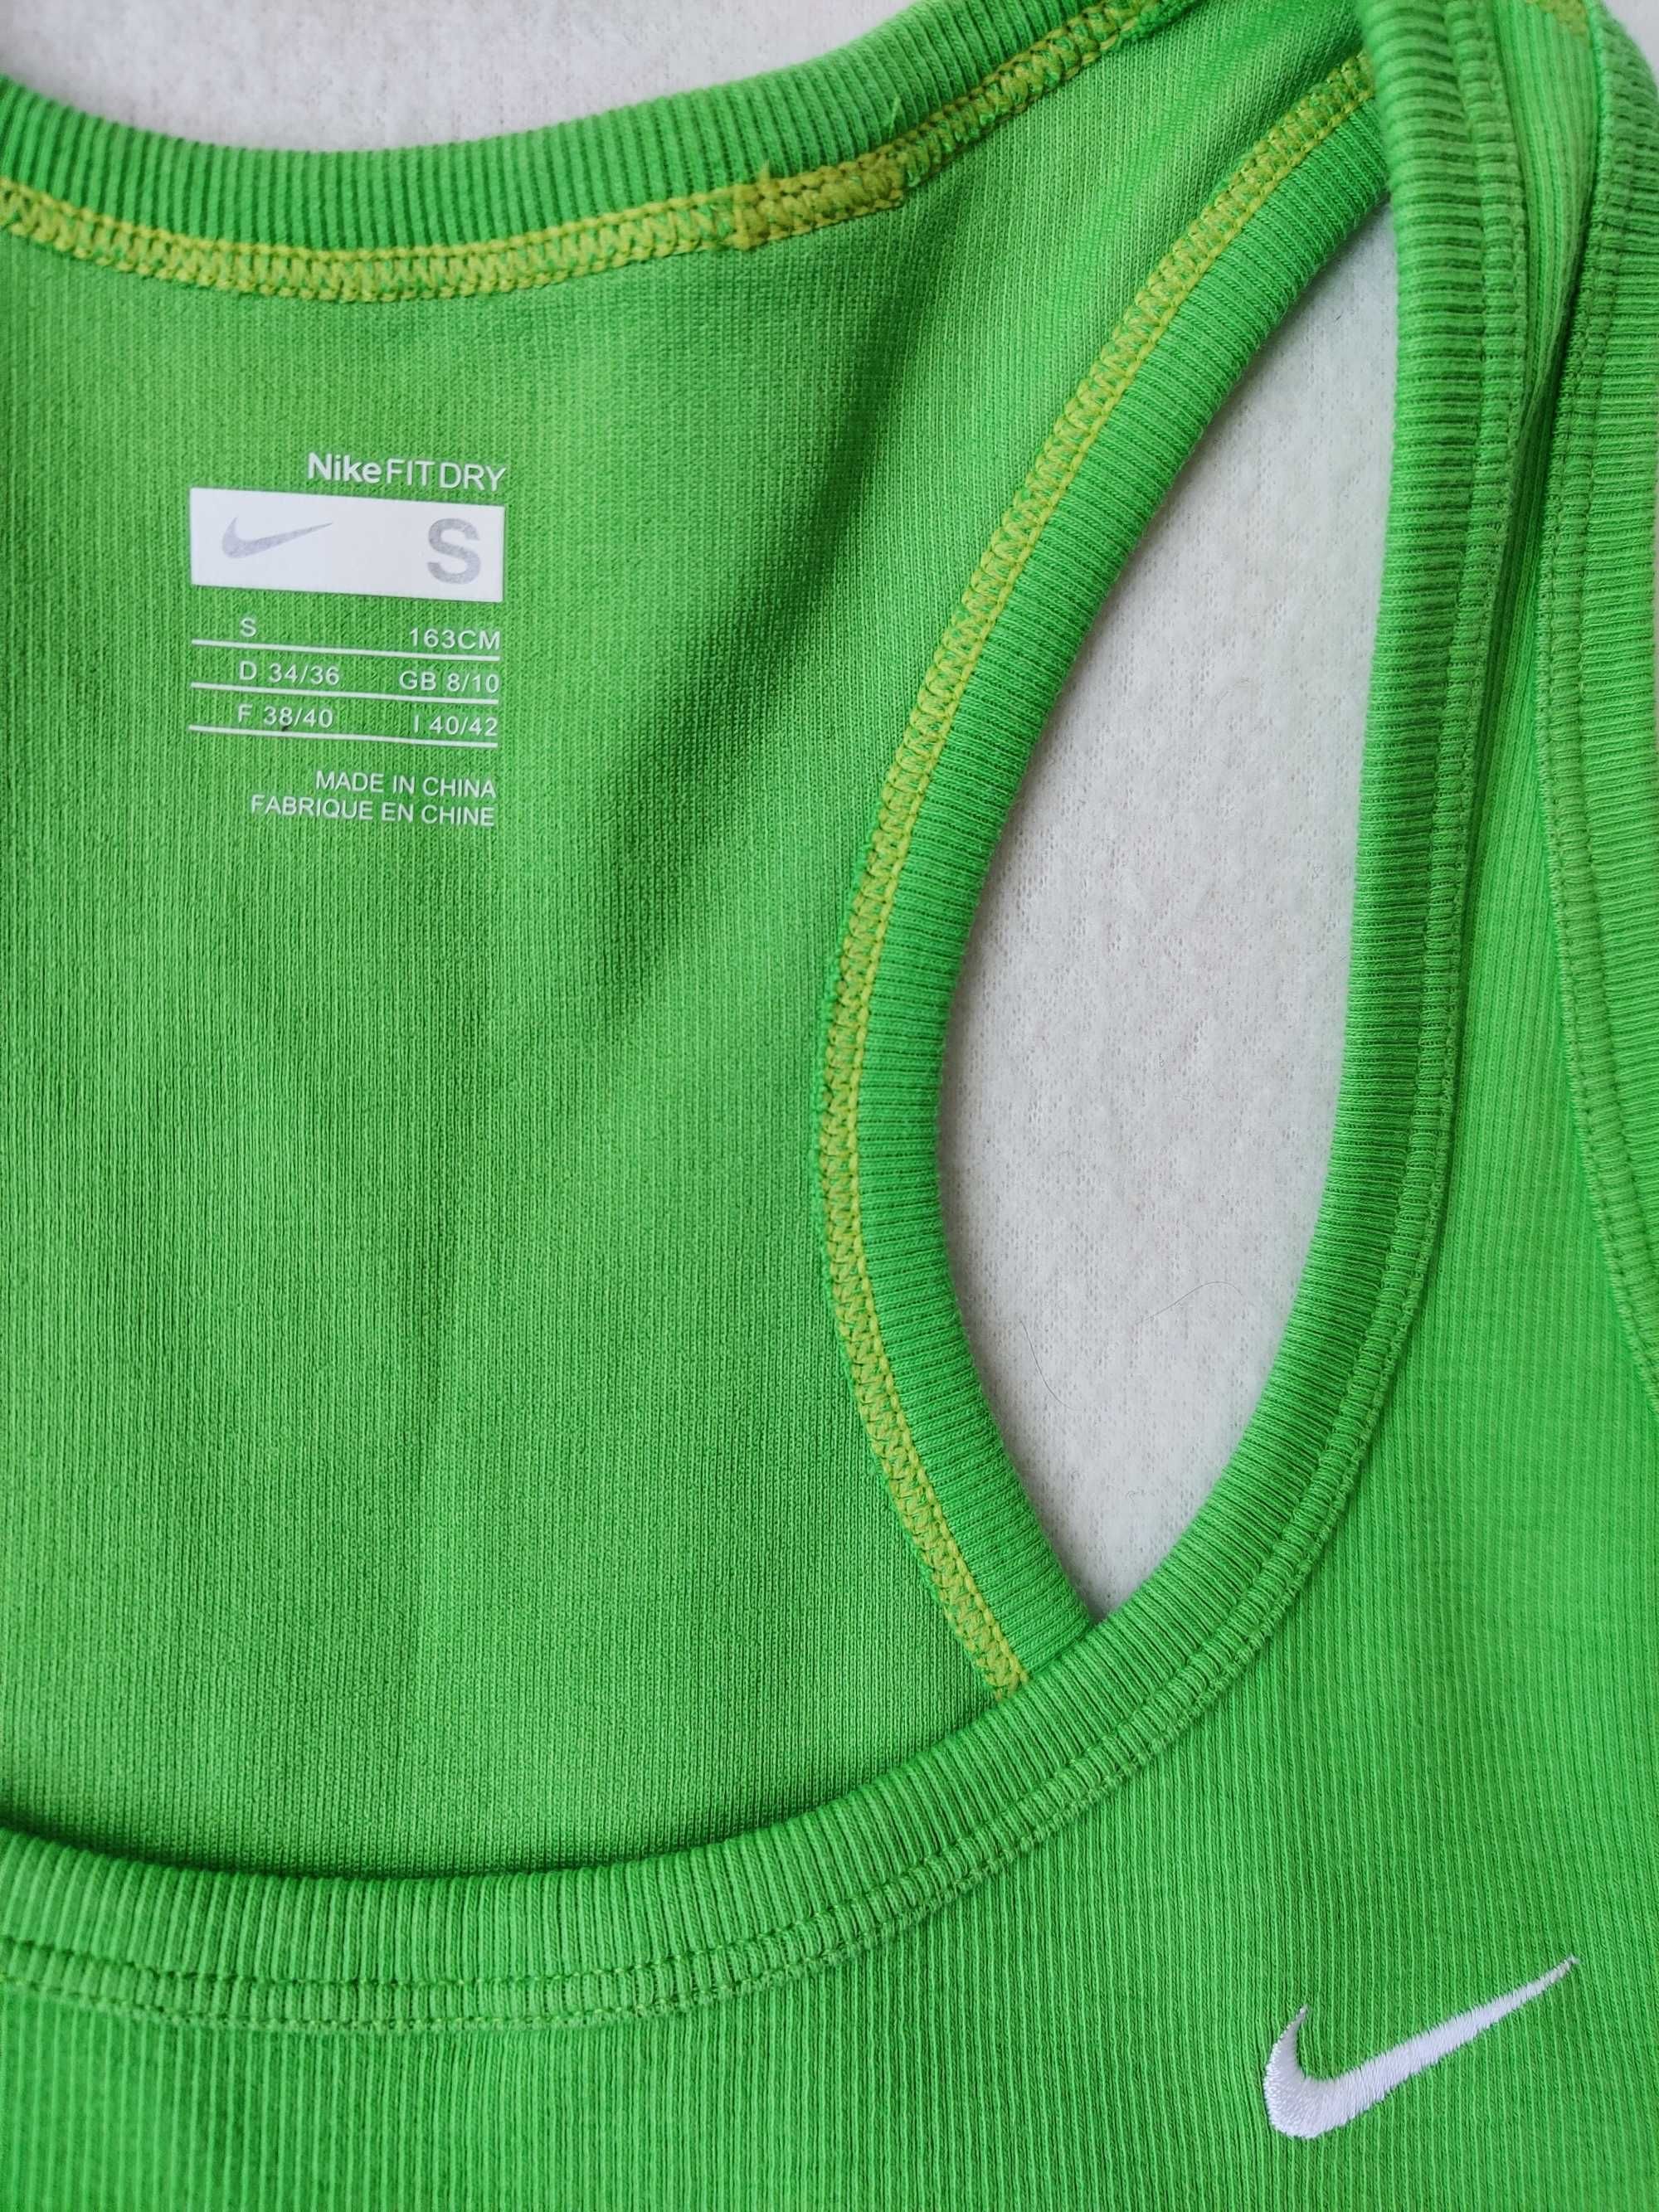 Nike Fit-Dry S koszulka damska bokserka na ramiączkach nowa